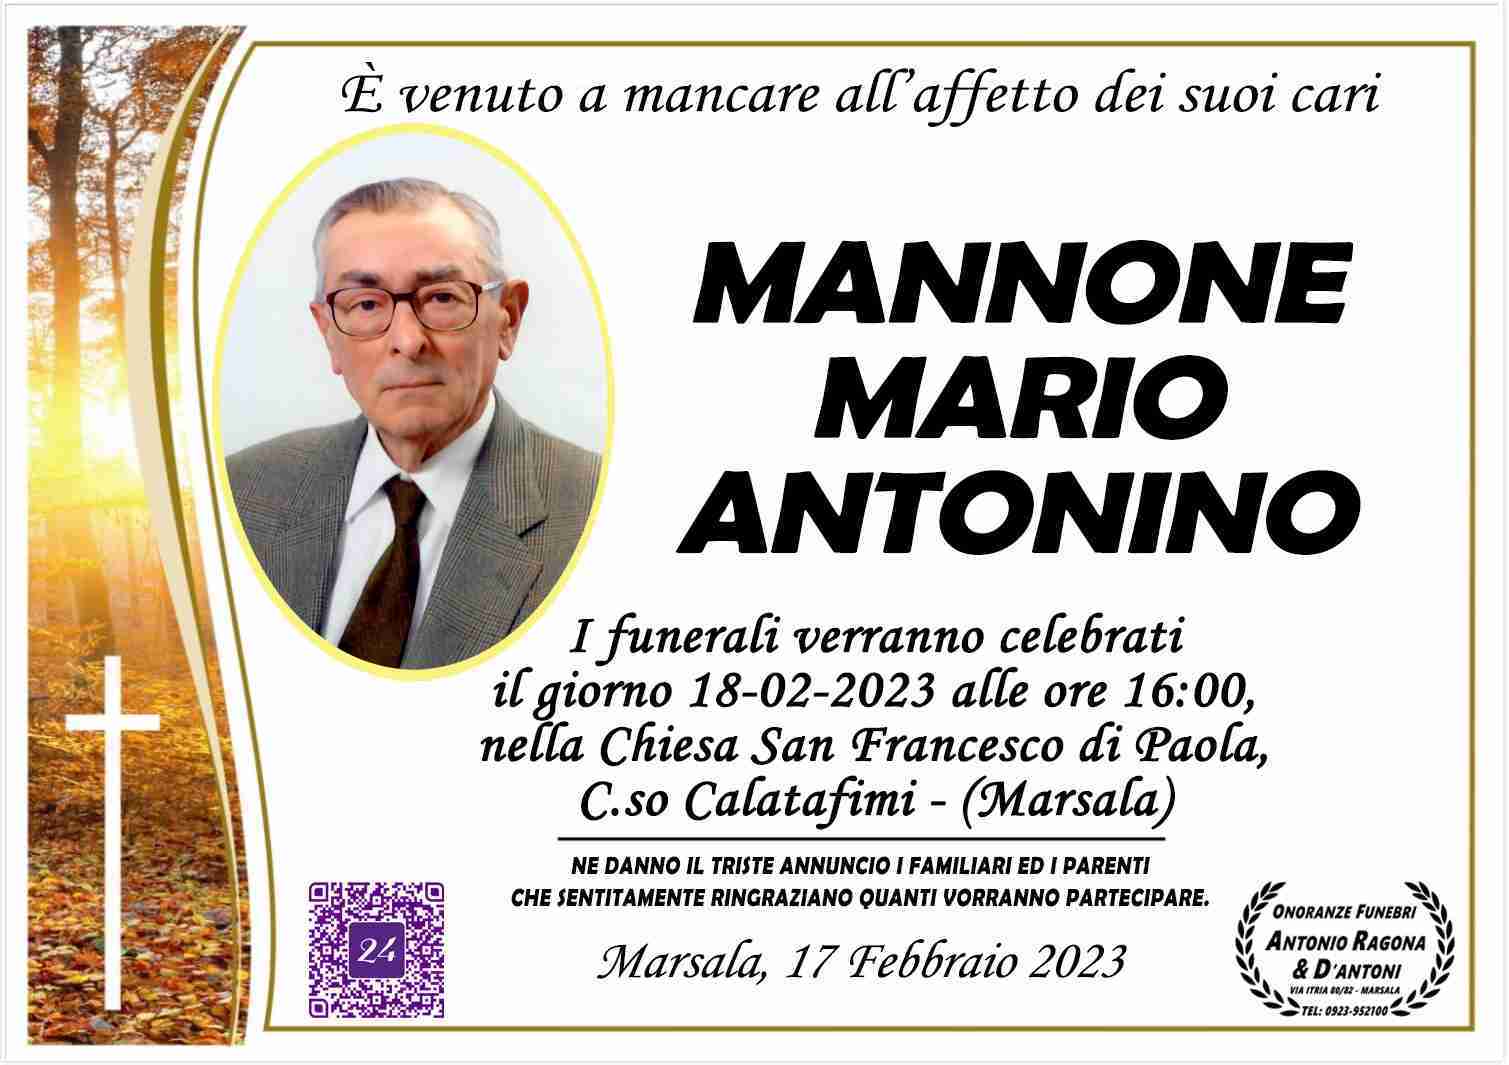 Mario Antonino Mannone